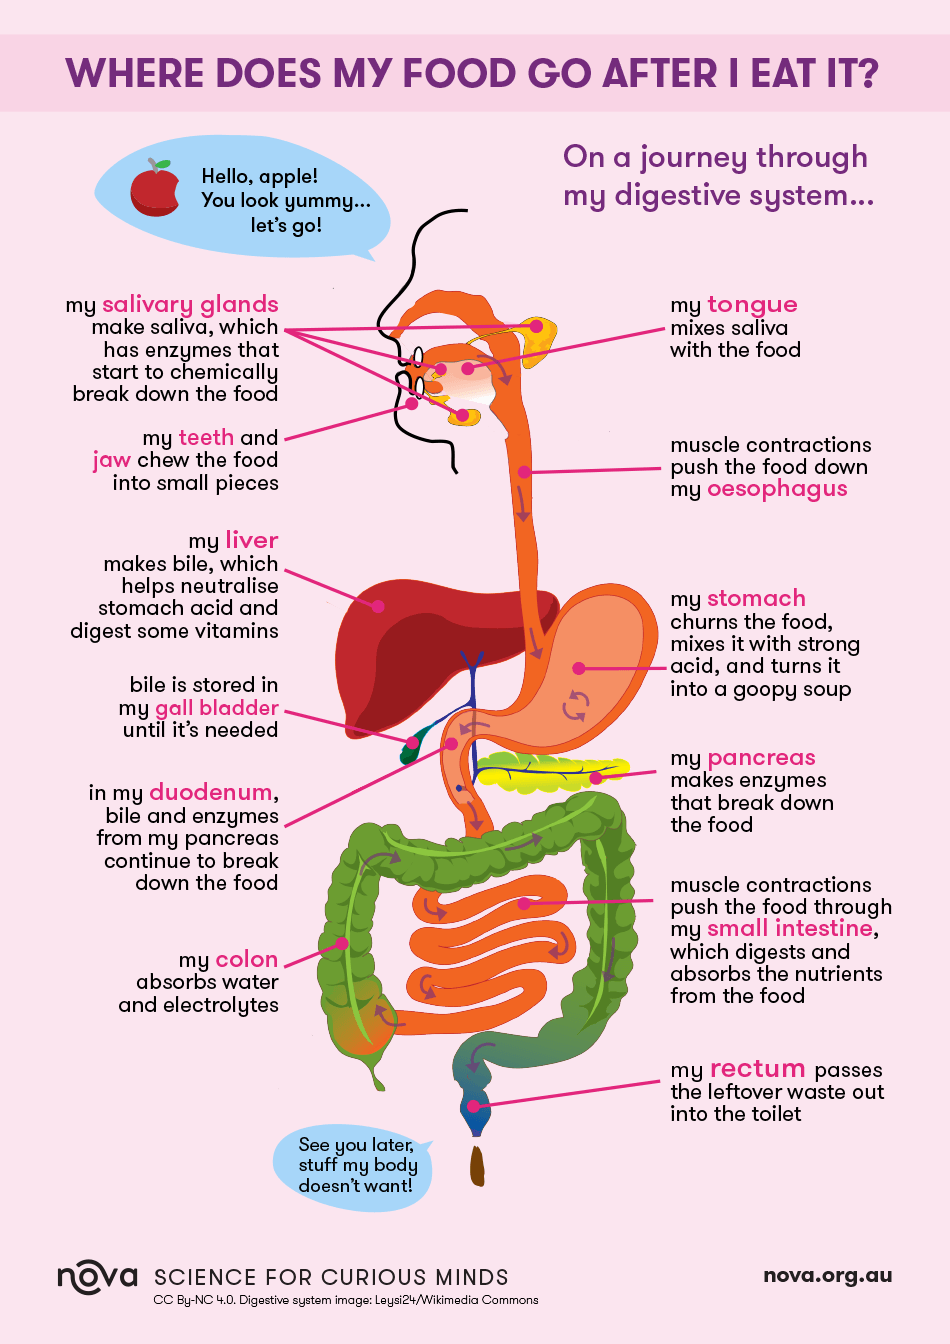 food travel through the small intestine